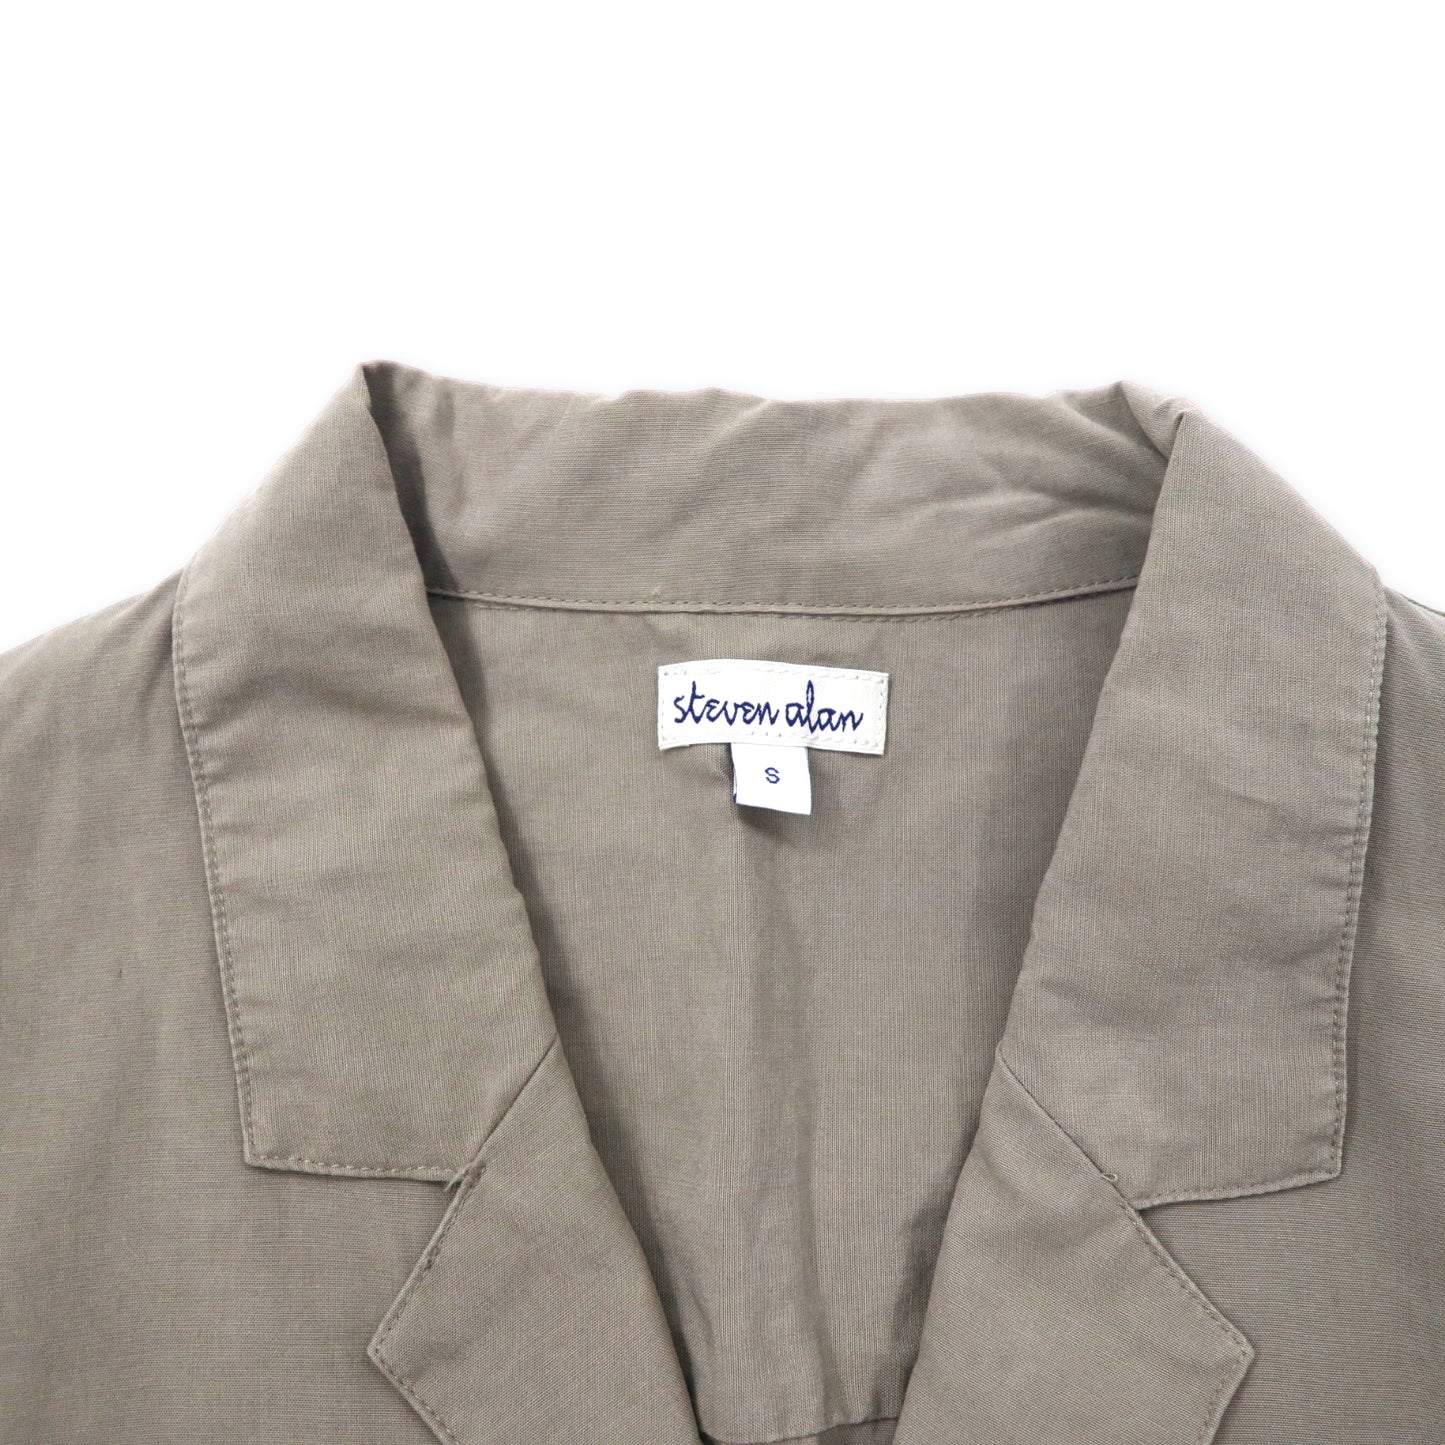 steven alan オープンカラーシャツ 半袖シャツ S グレー リヨセル コットン CTN/LYCL TRAD OPENCOLLAR SSL 8116-299-0058 日本製